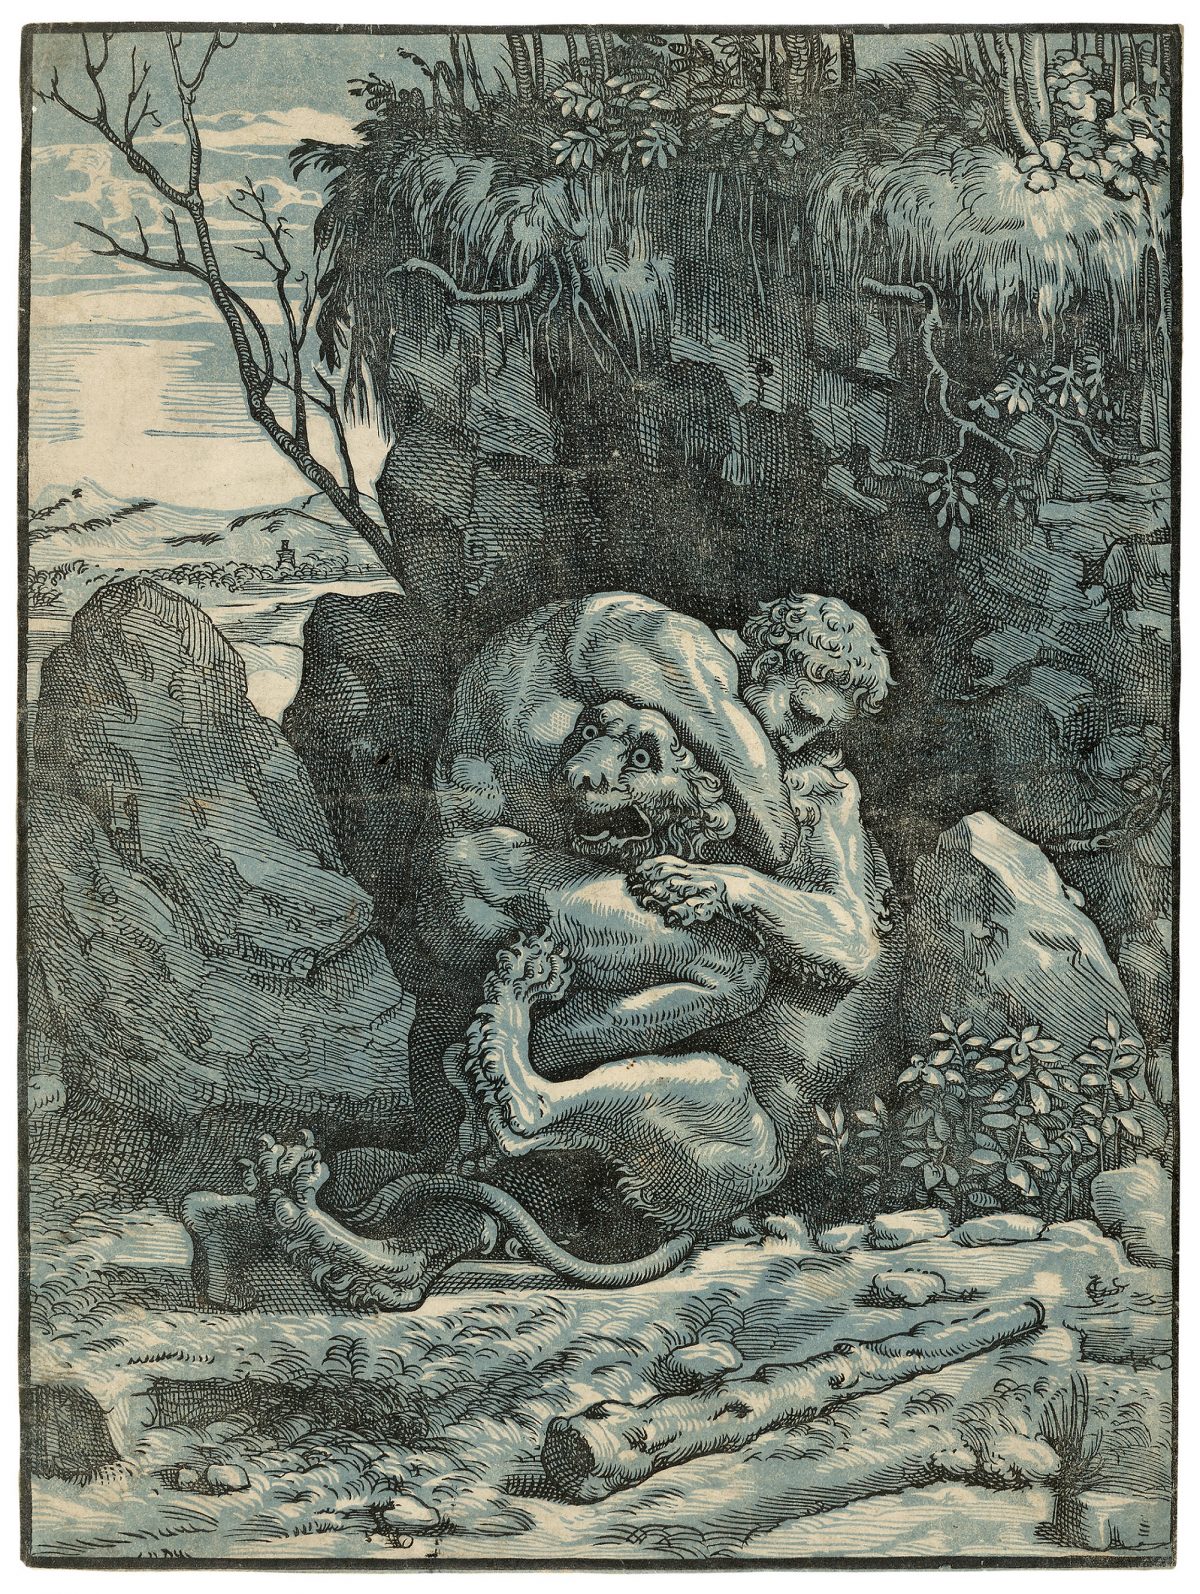 Warrior Hercules wrestles a lion, black and blue chiaroscuro print. Raphael. Ugo da Carpi.